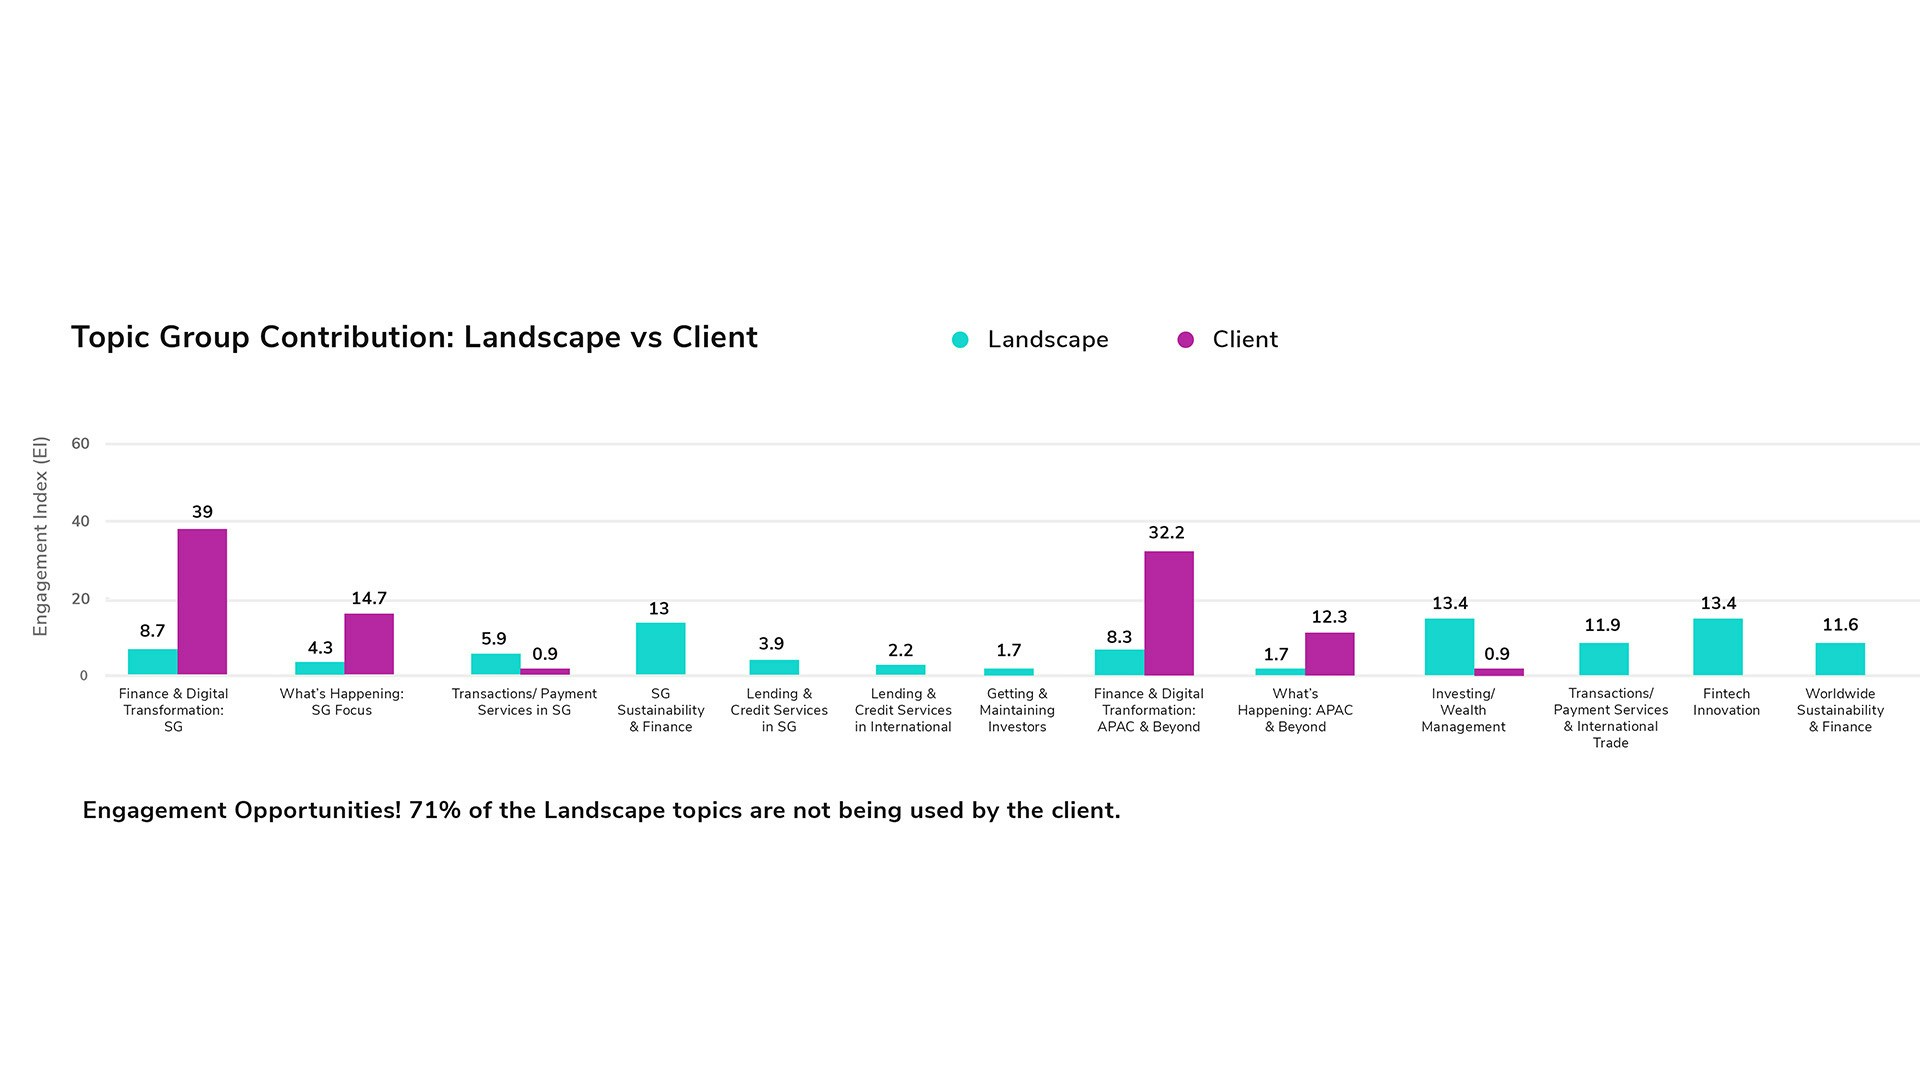 Immedia Content's graph - topic group contribution, landscape vs client